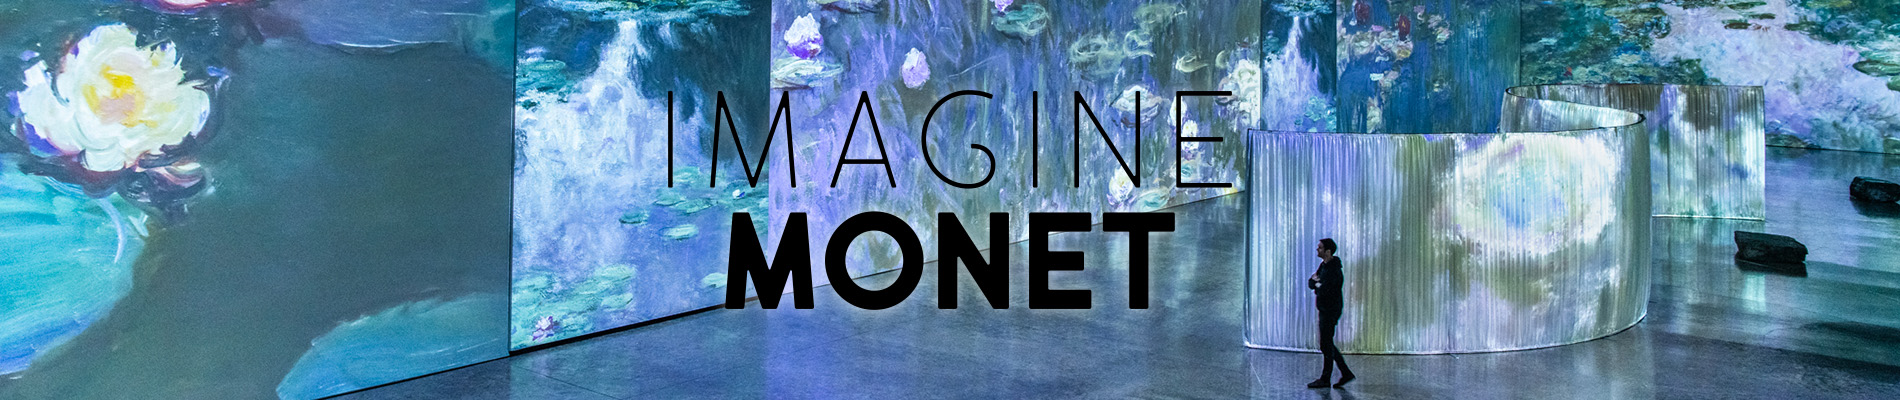 Imagine Monet : The immersive exhibition